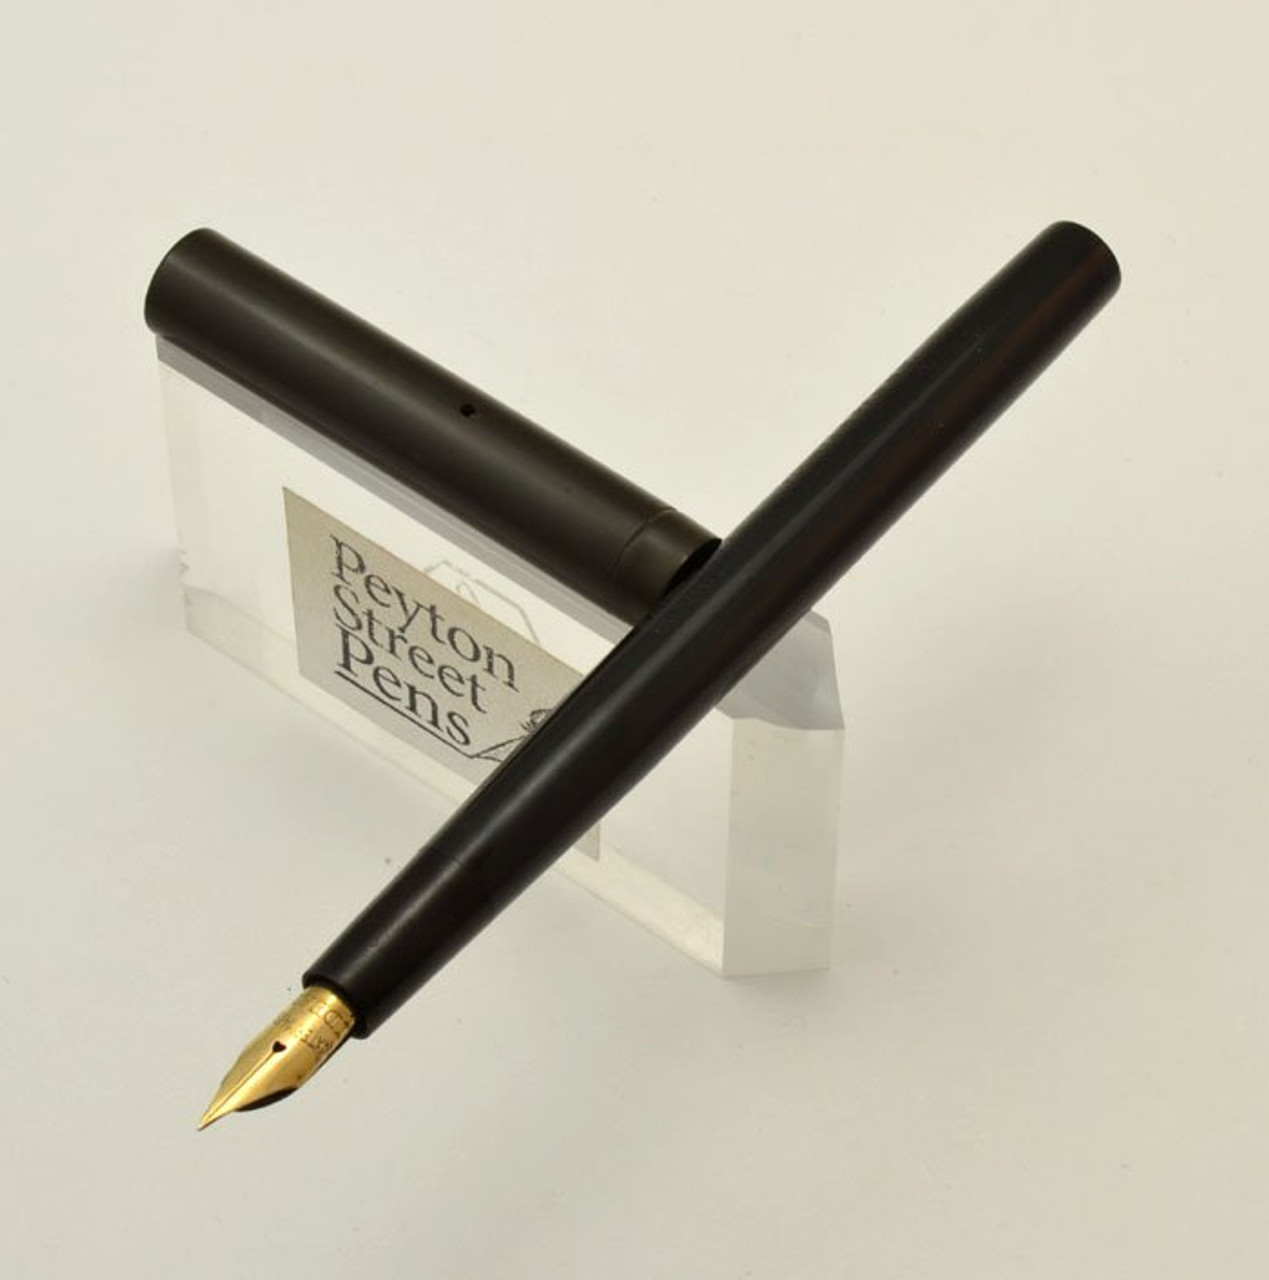 Waterman 12 Fountain Pen - Eyedropper, Black Hard Rubber, Flexible New York Nib (Excellent, Restored)